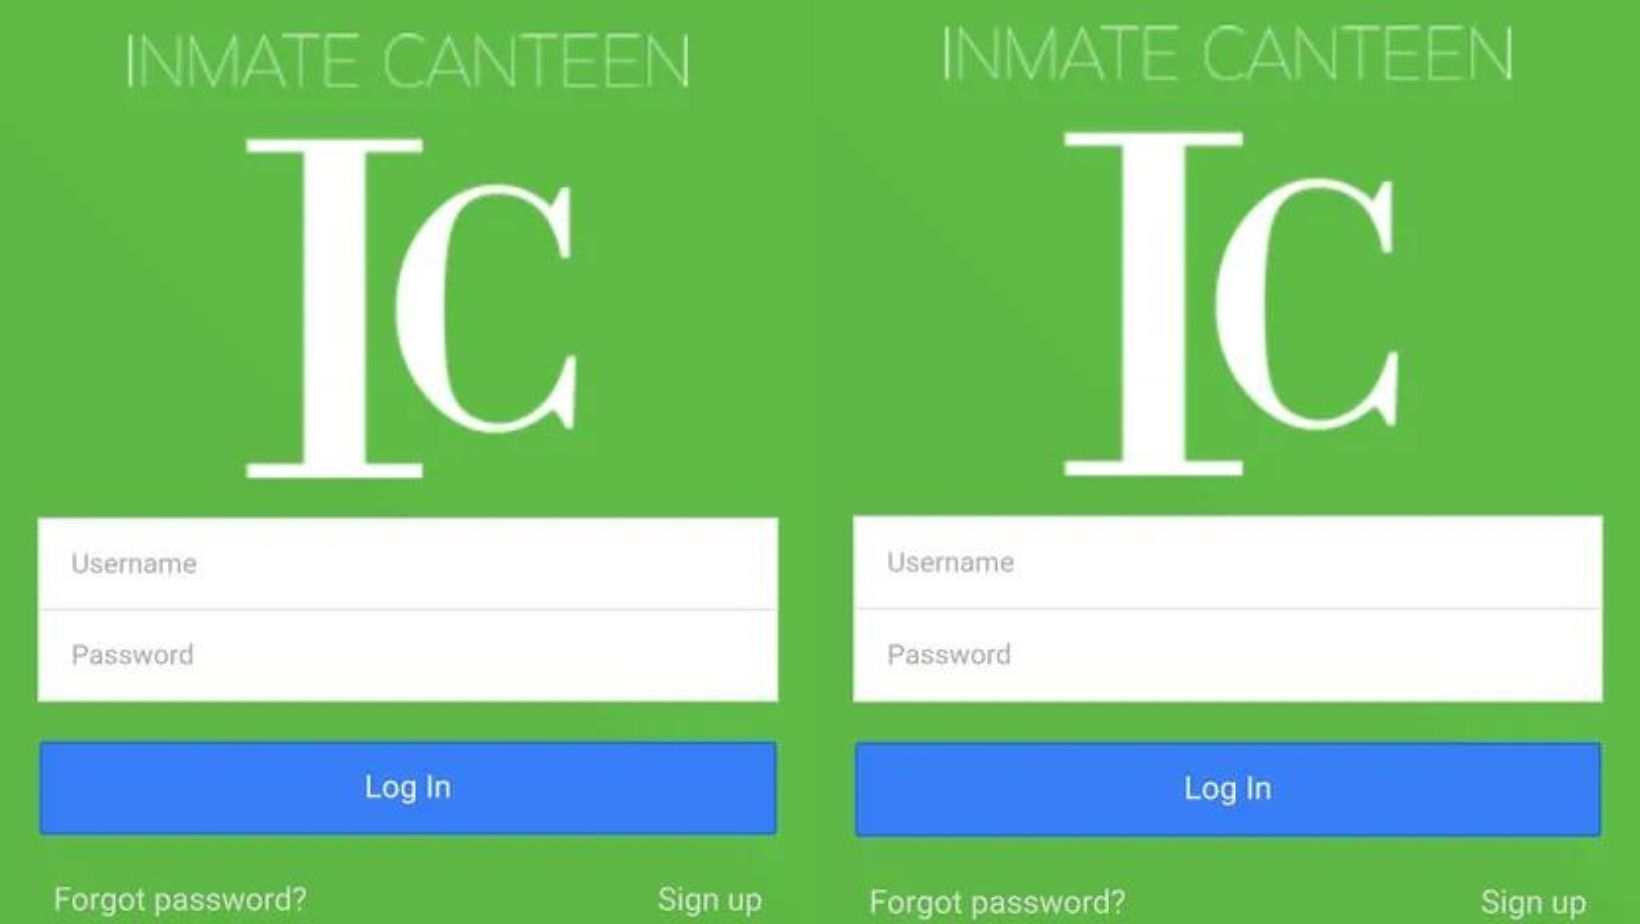 team3.inmate canteen.com